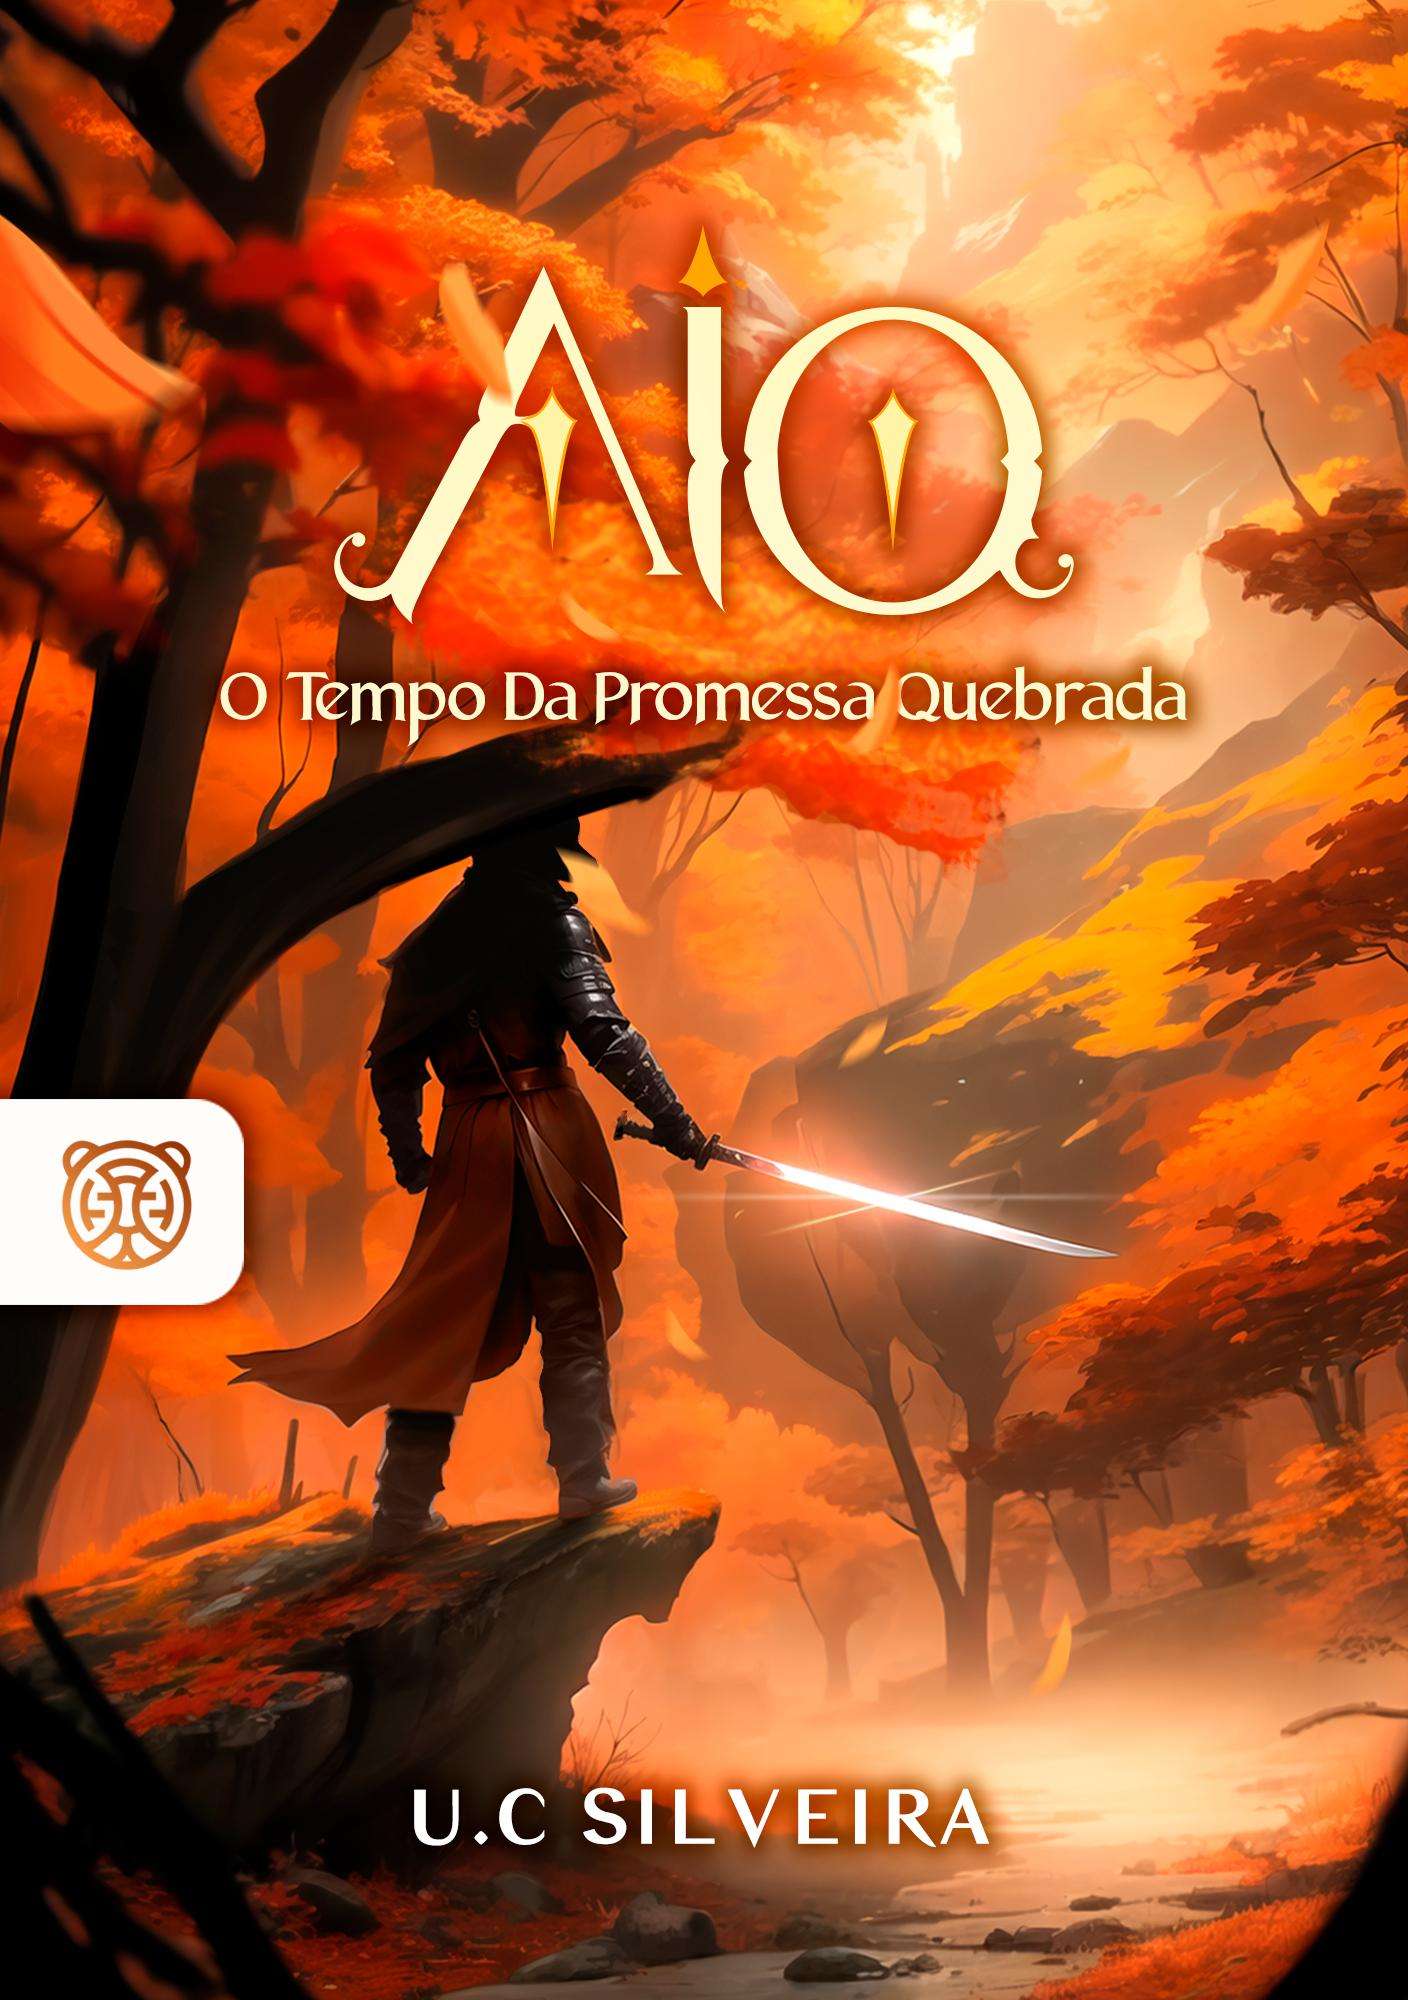 Capa da novel AIO: O Tempo da Promessa Quebrada